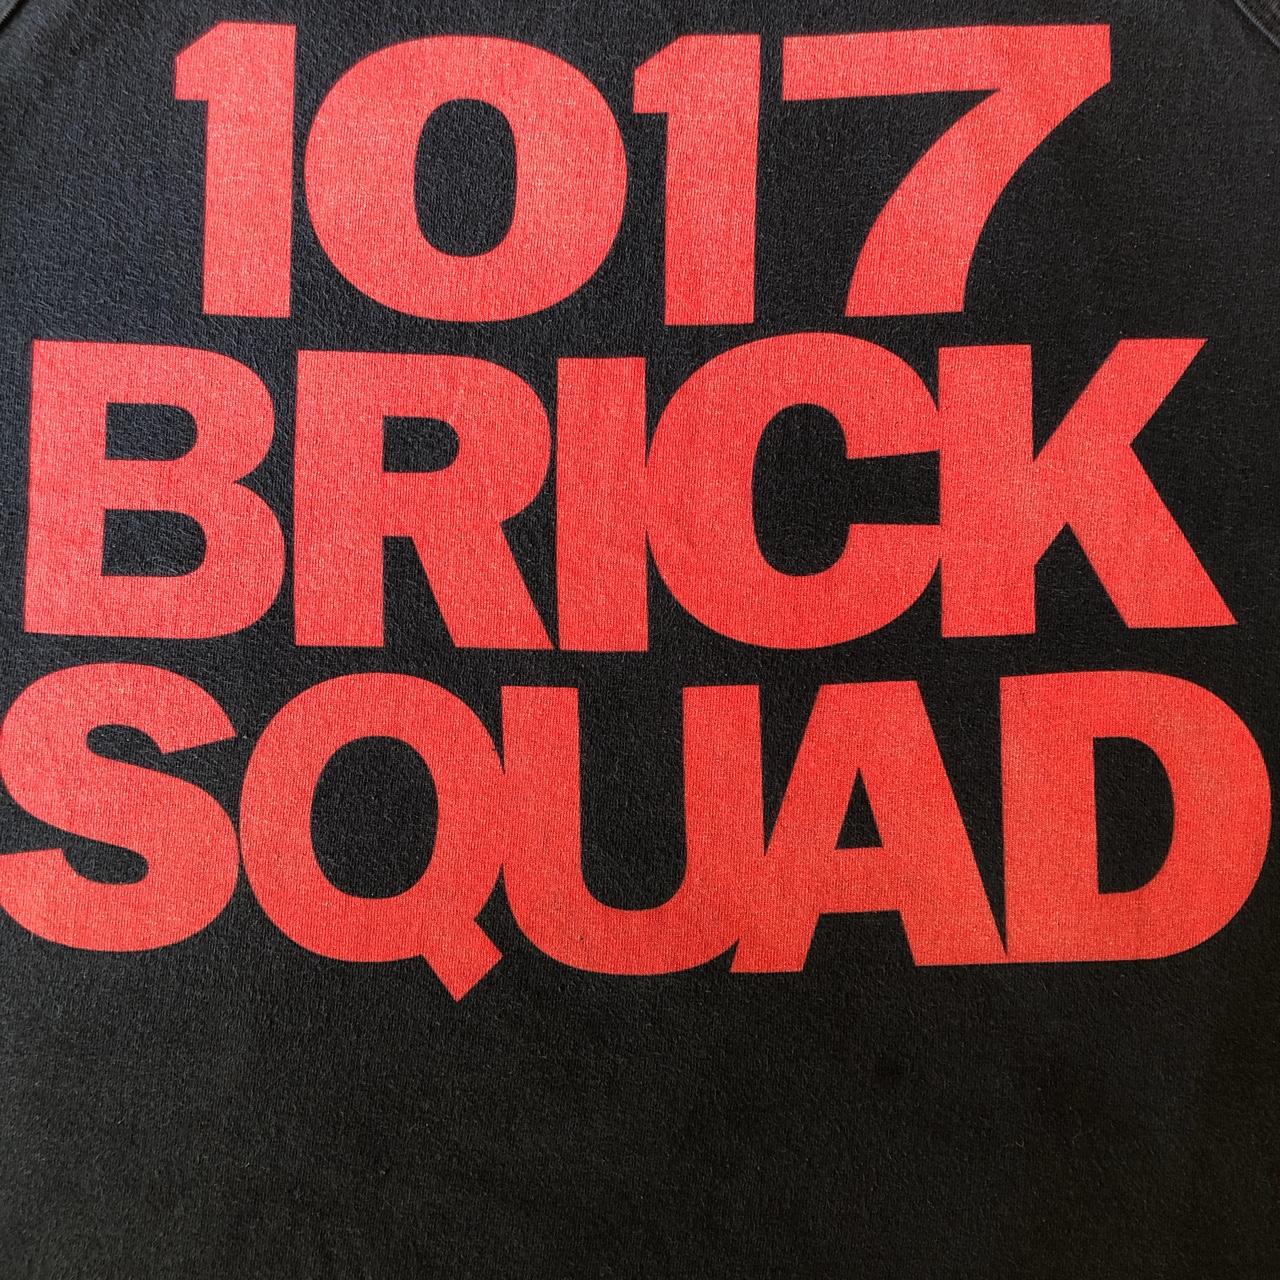 1017 brick squad logo